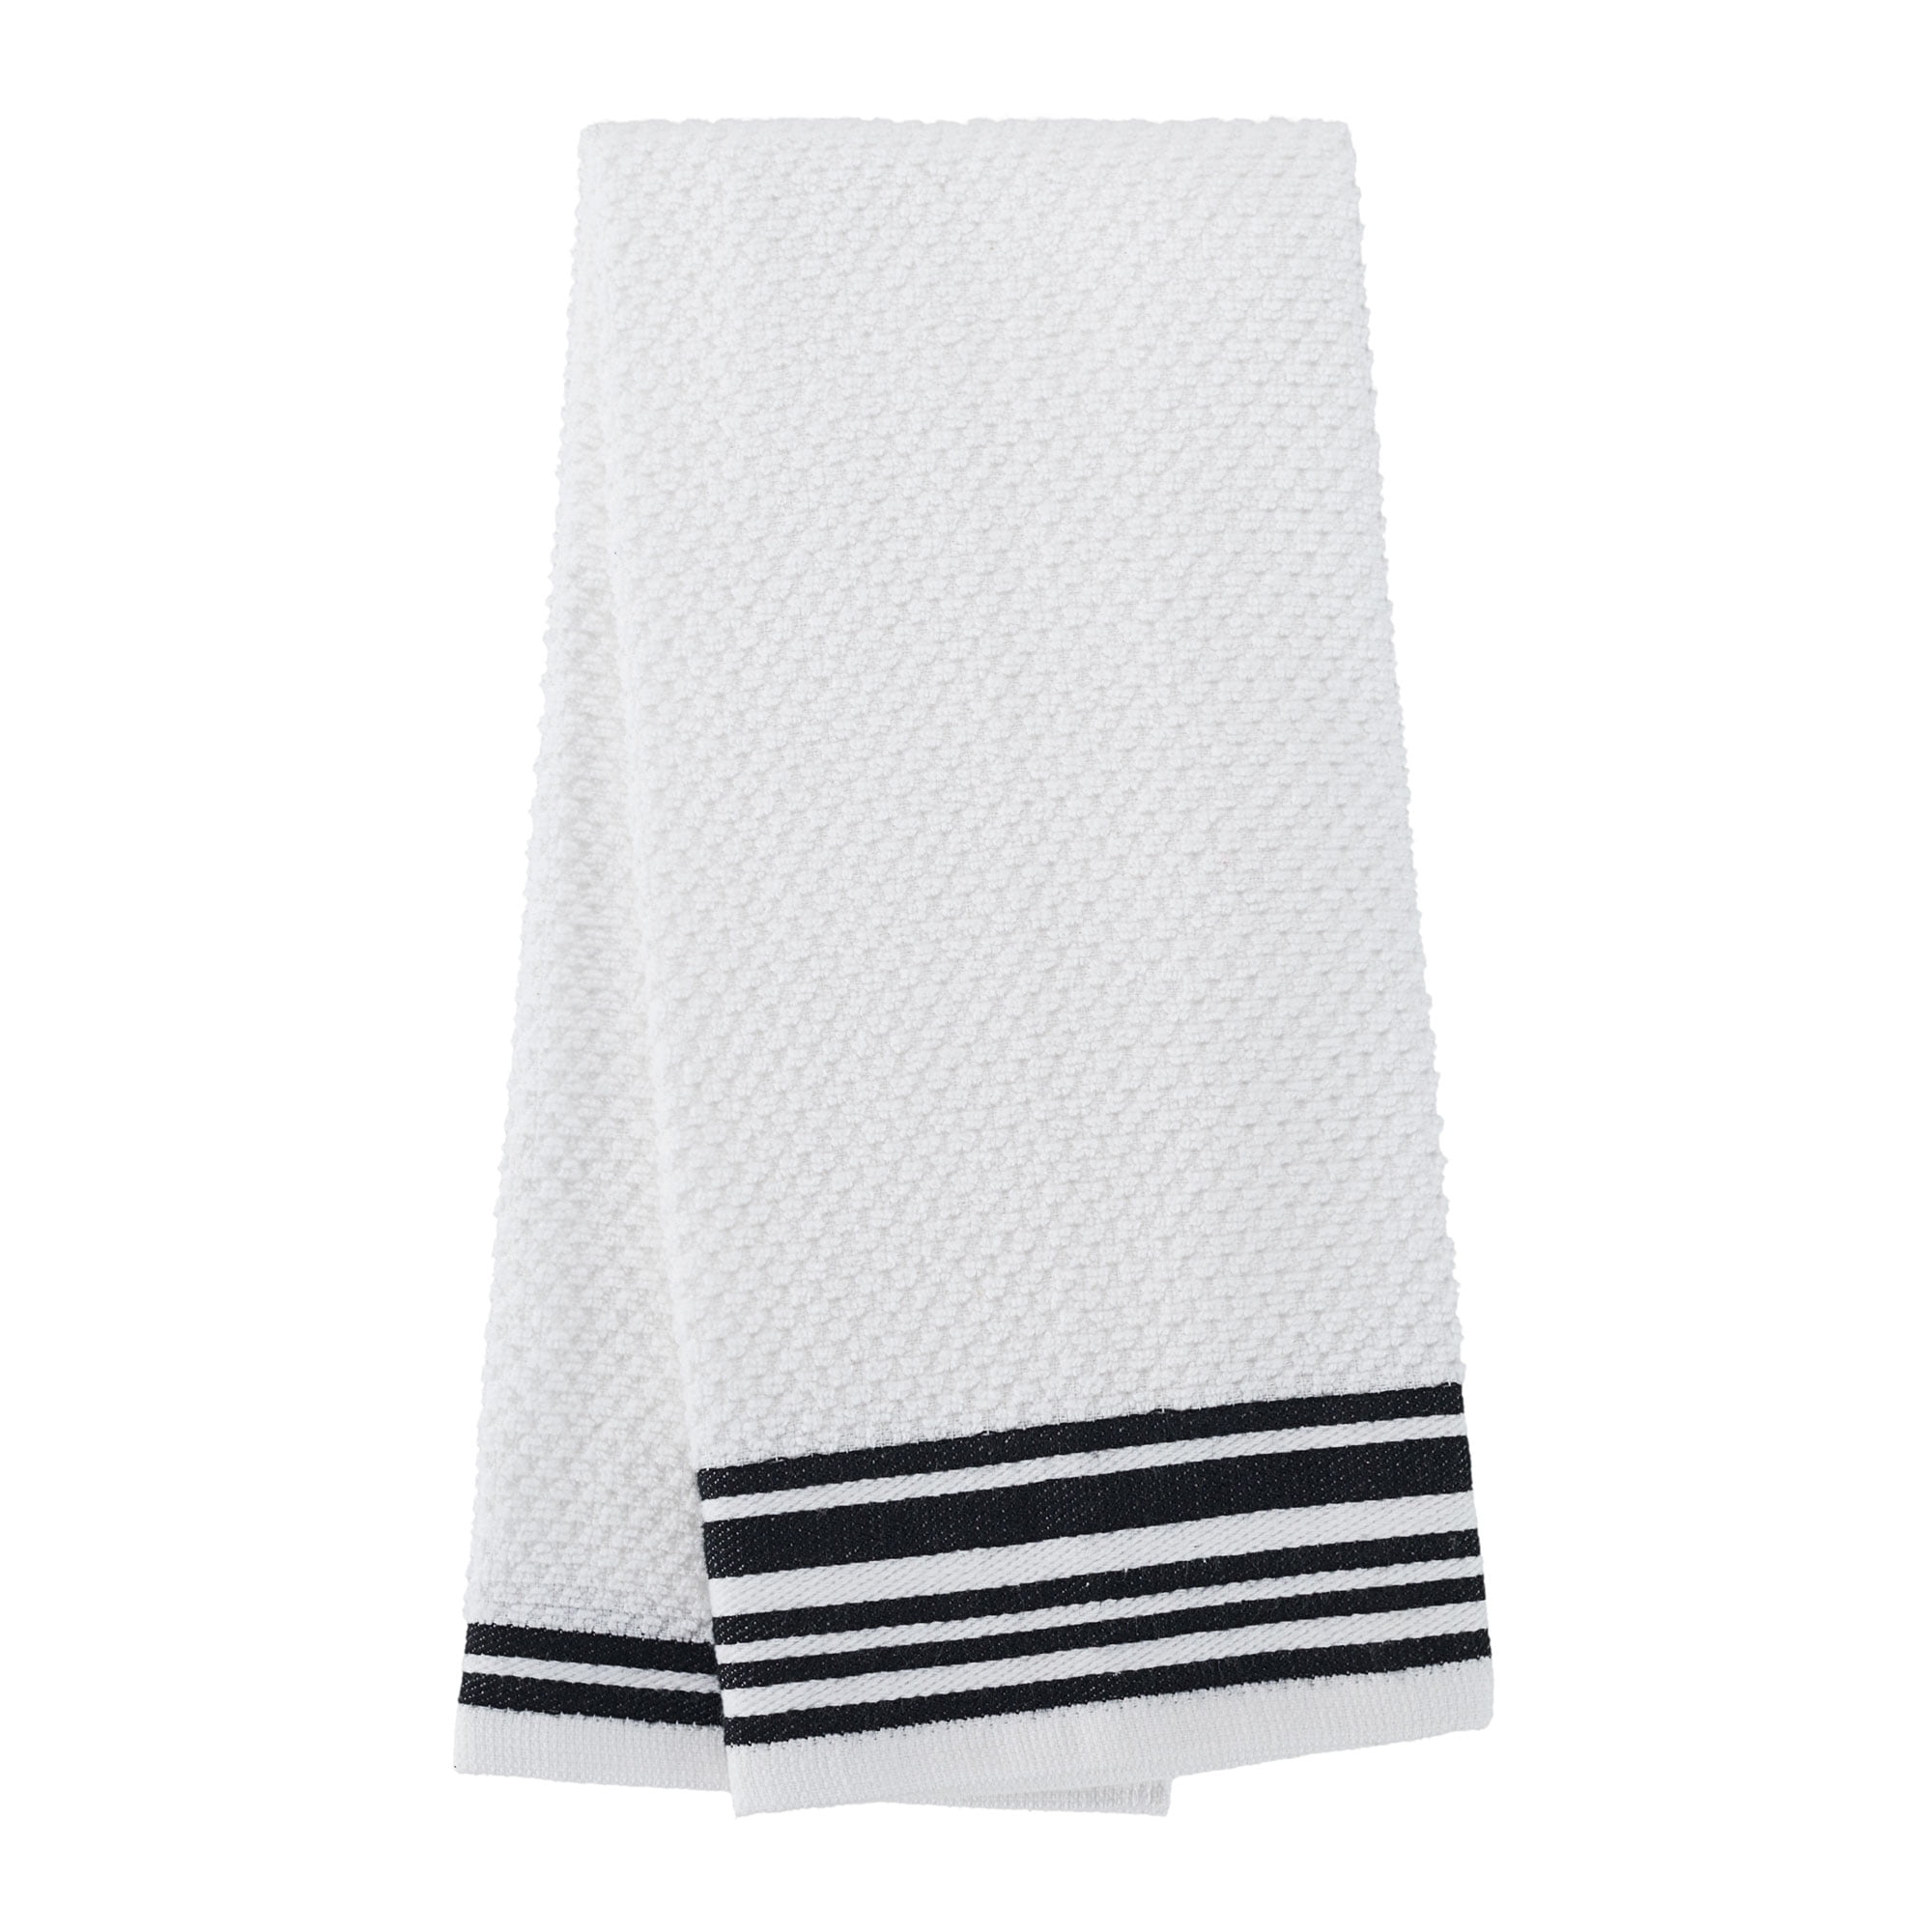 Mainstays 4-Pack 16”x26” Woven Kitchen Towel Set, Rich Black 